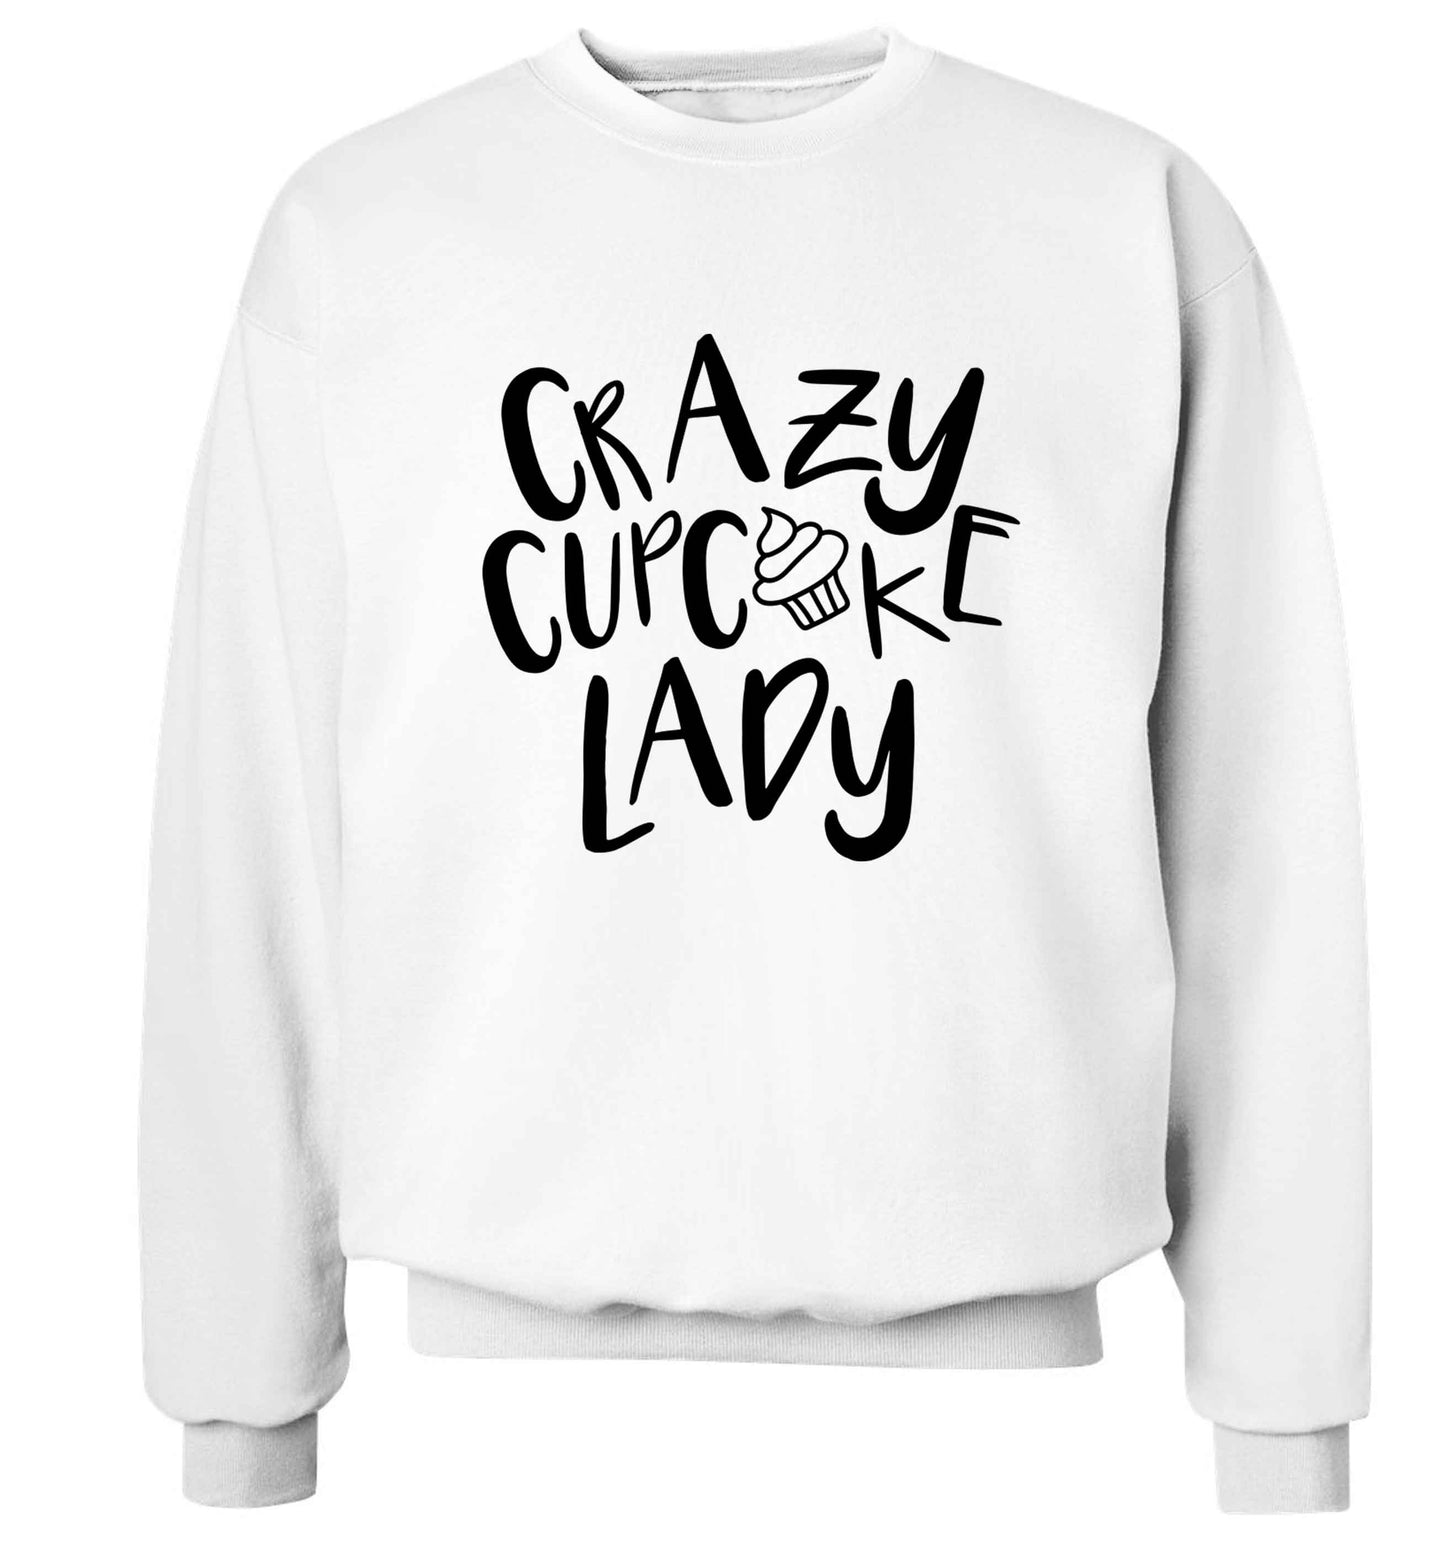 Crazy cupcake lady Adult's unisex white Sweater 2XL